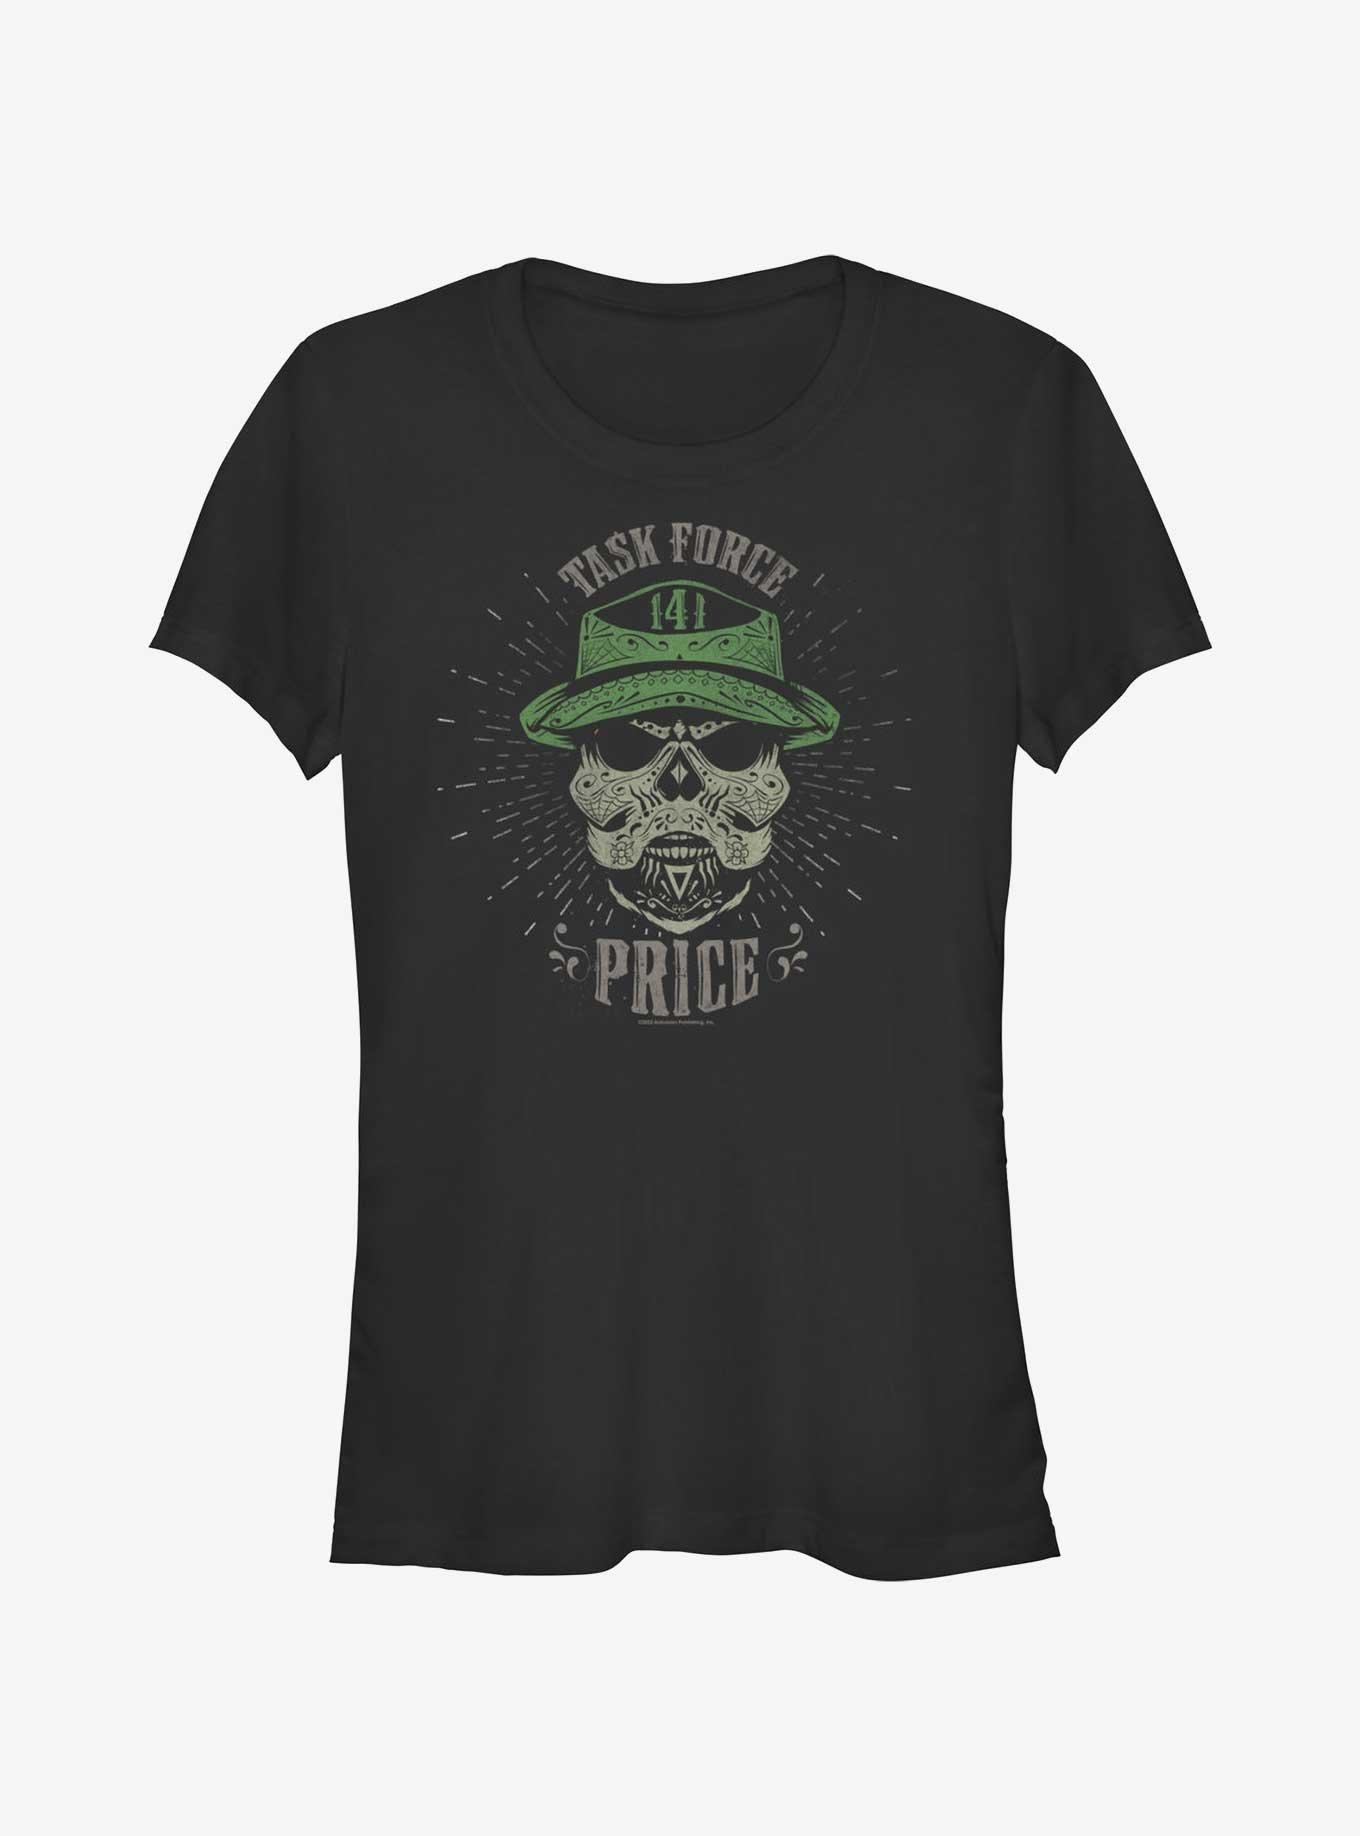 Call of Duty Task Force Price Graffiti Girls T-Shirt, , hi-res